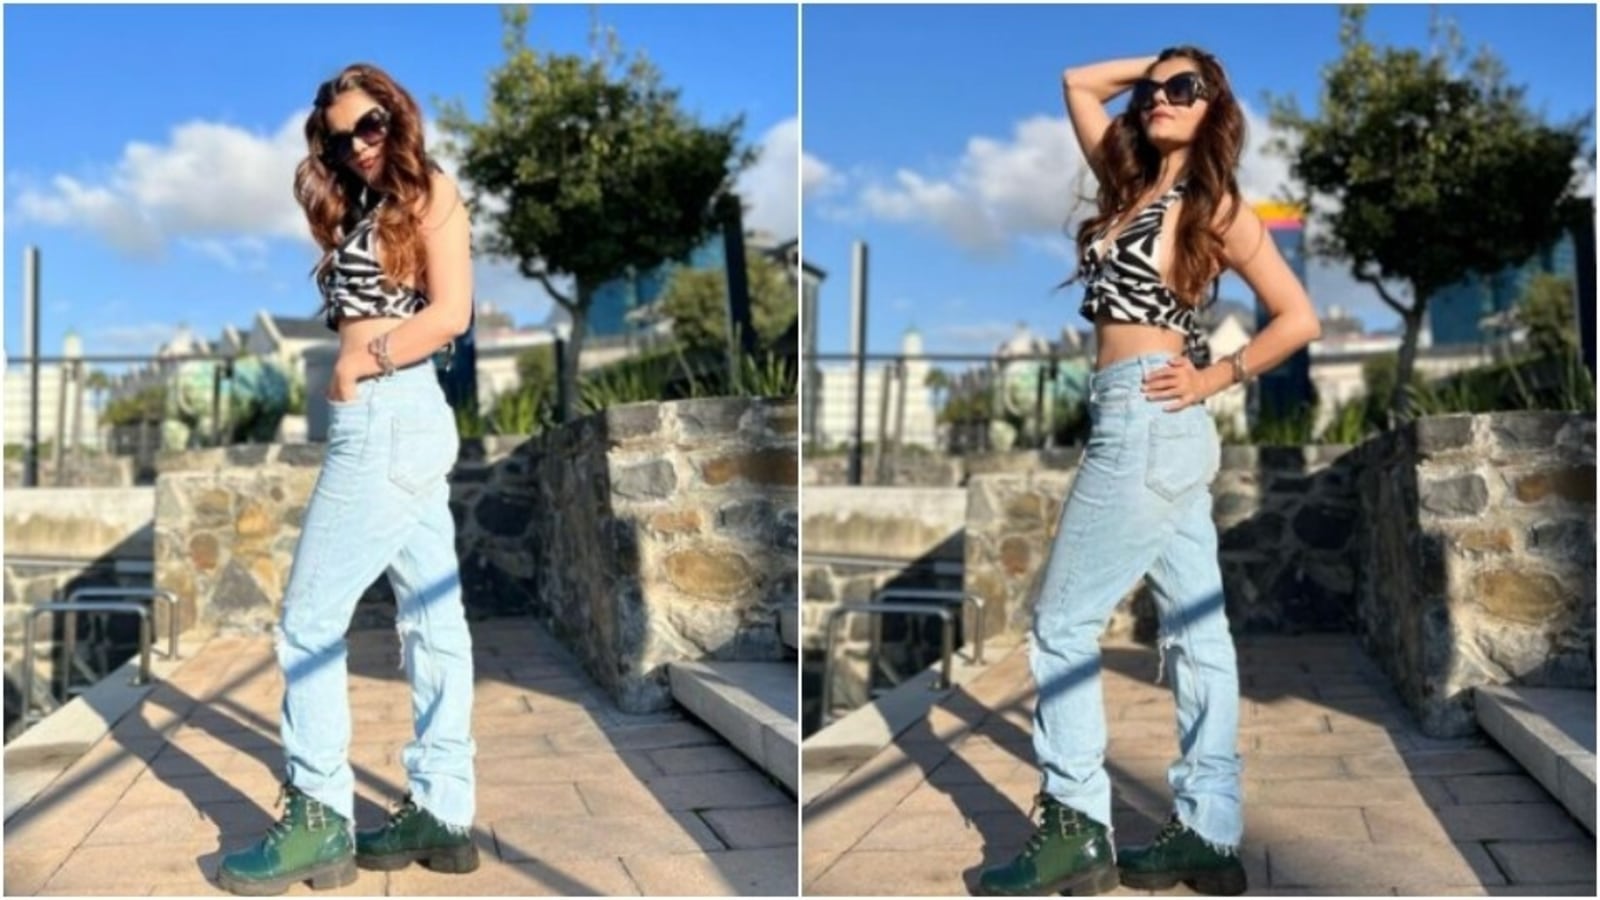 Rubina Dilaik slays summer fashion goals in cropped top, denims